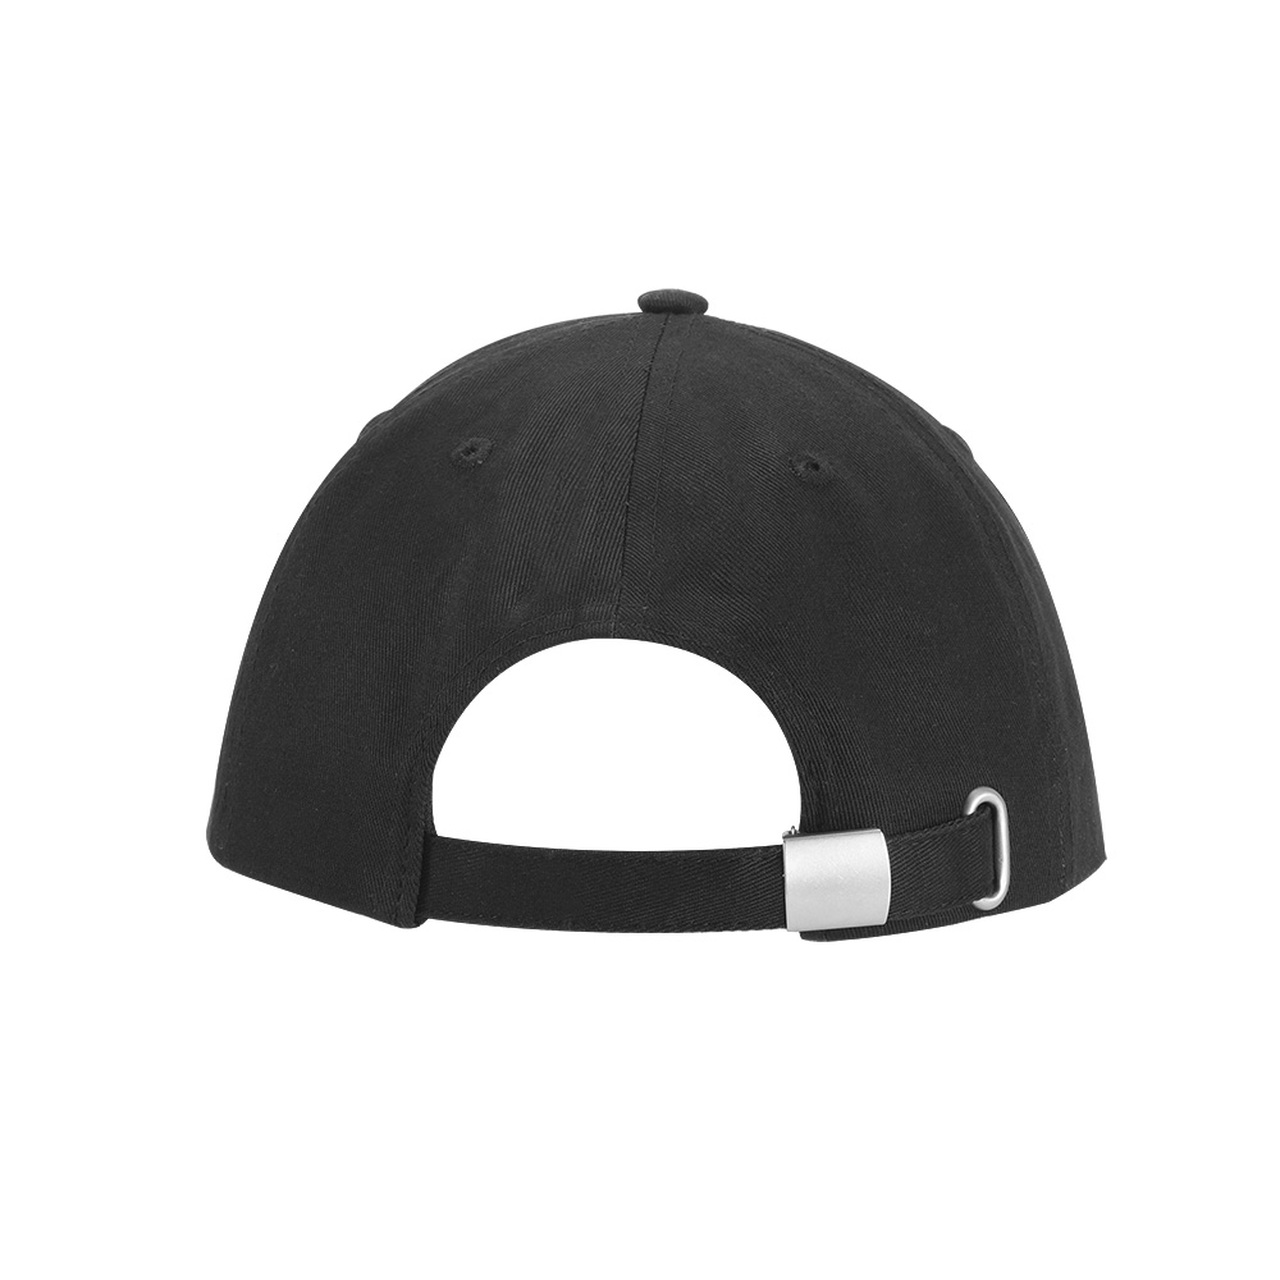 SmallRig Logo Baseball Cap PCC2462 หมวกแก๊ปของแท้ลิขสิทธิ์ SmallRig ป้องกันแสงแดดสำหรับถ่ายวิดีโอกลางแจ้ง ผ้าฝ้ายใส่สบาย แถบซับเหงื่อ ราคา 290 บาท